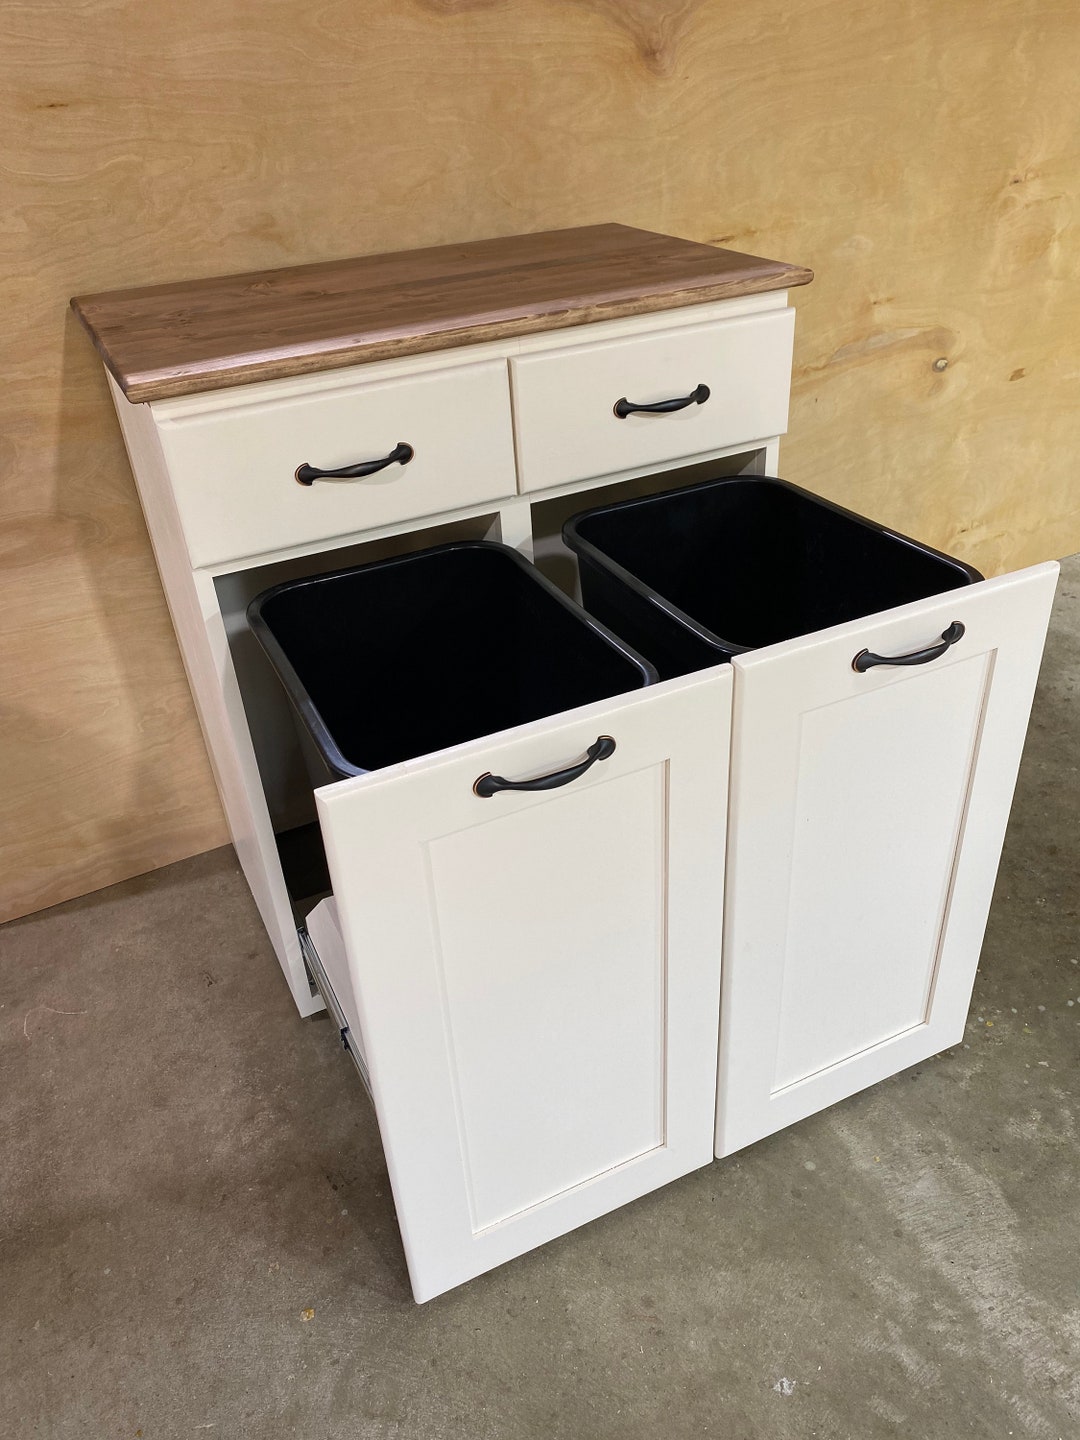 Double Trash Bin, Tilt Out Trash Can Cabinet, Wooden Trash Bin